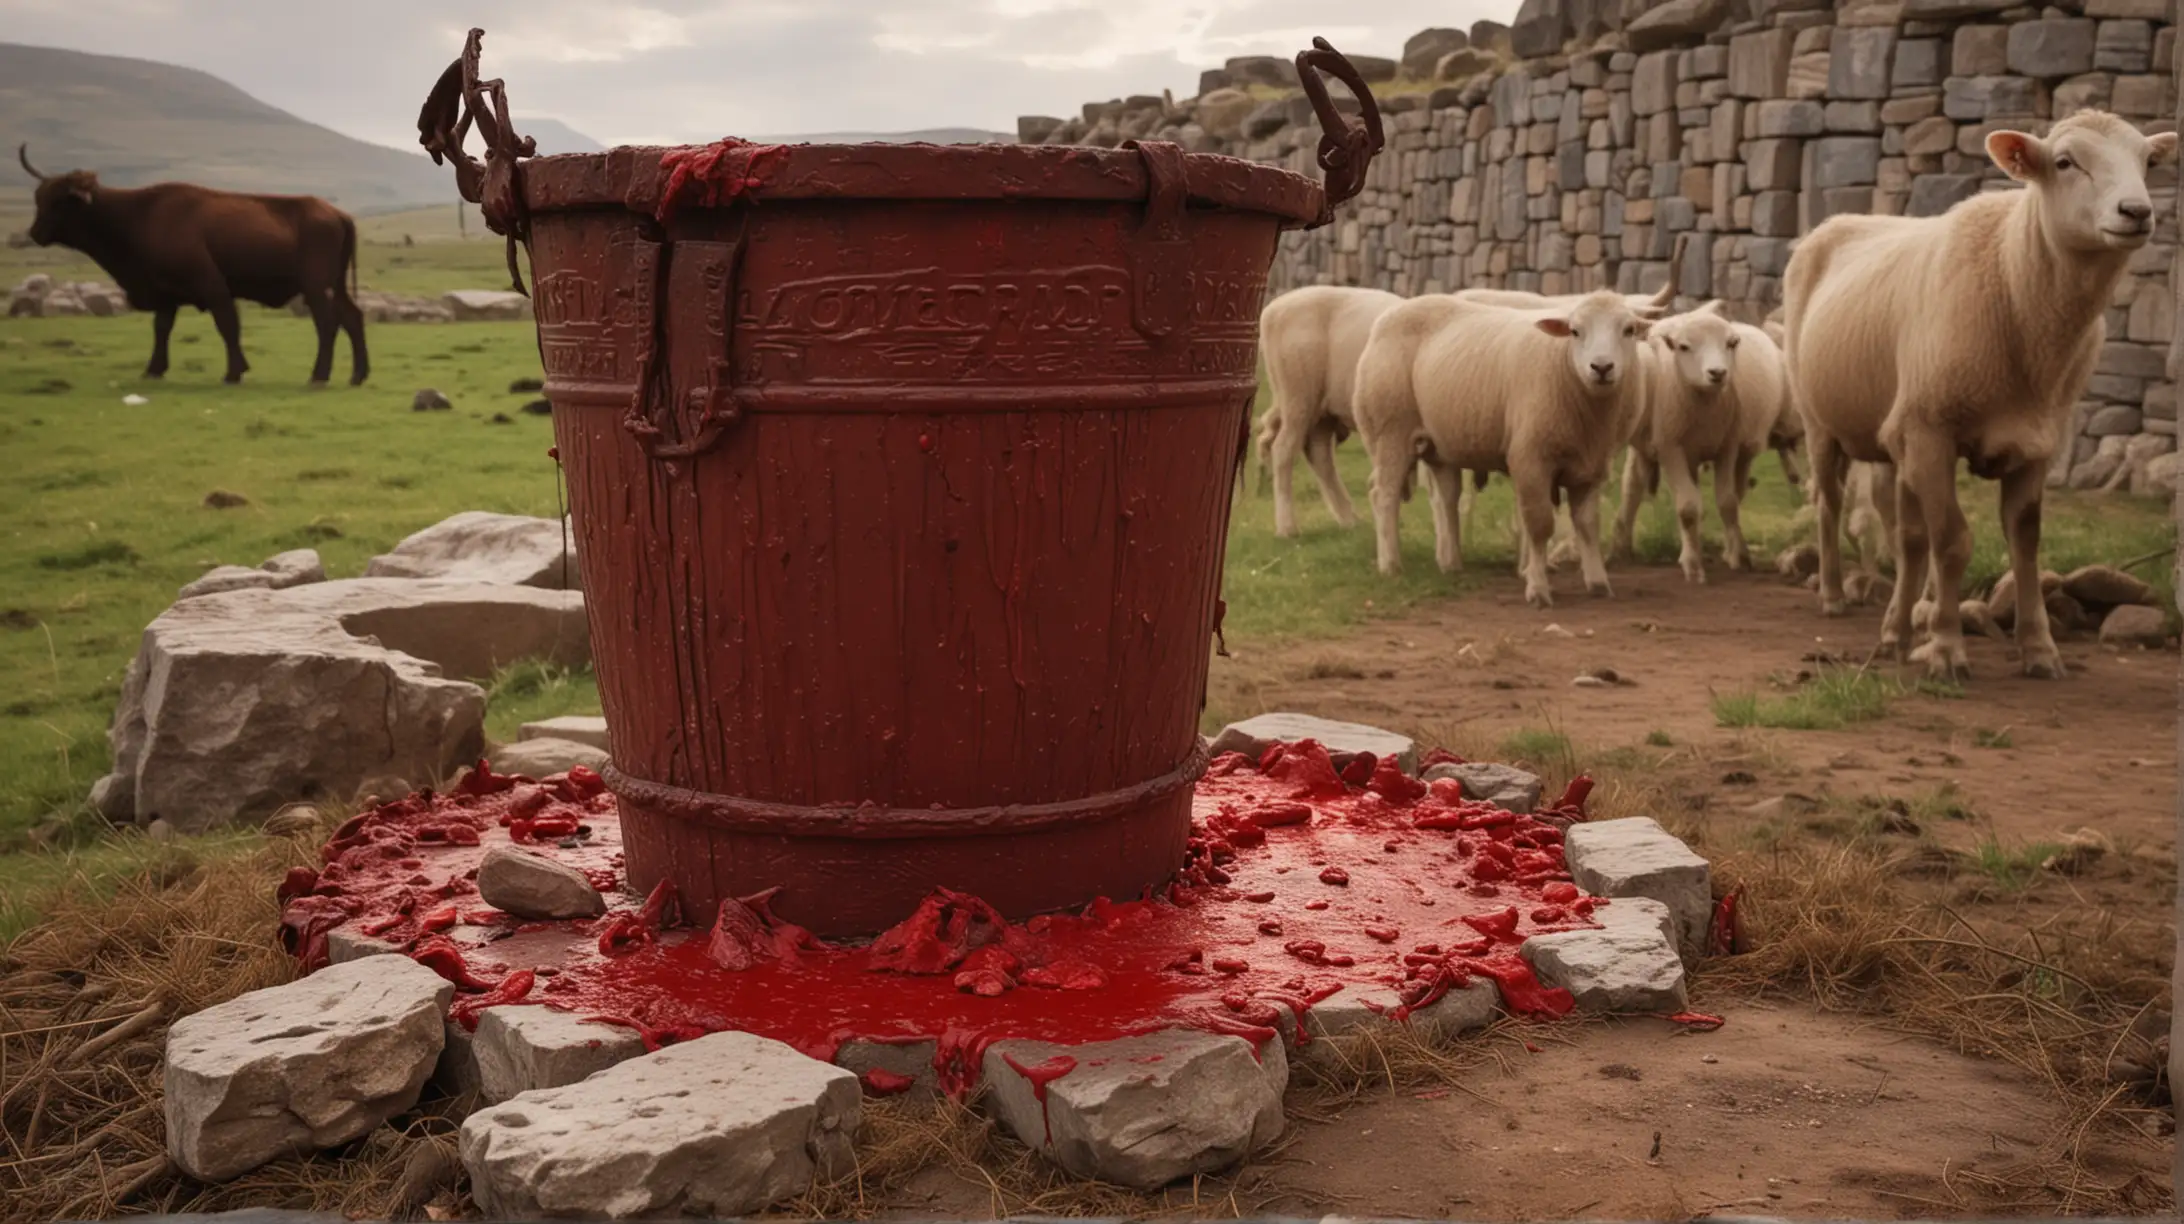 Biblical Era CloseUp Red Paint Bucket and Sacrificial Altar with Oxen and Lambs